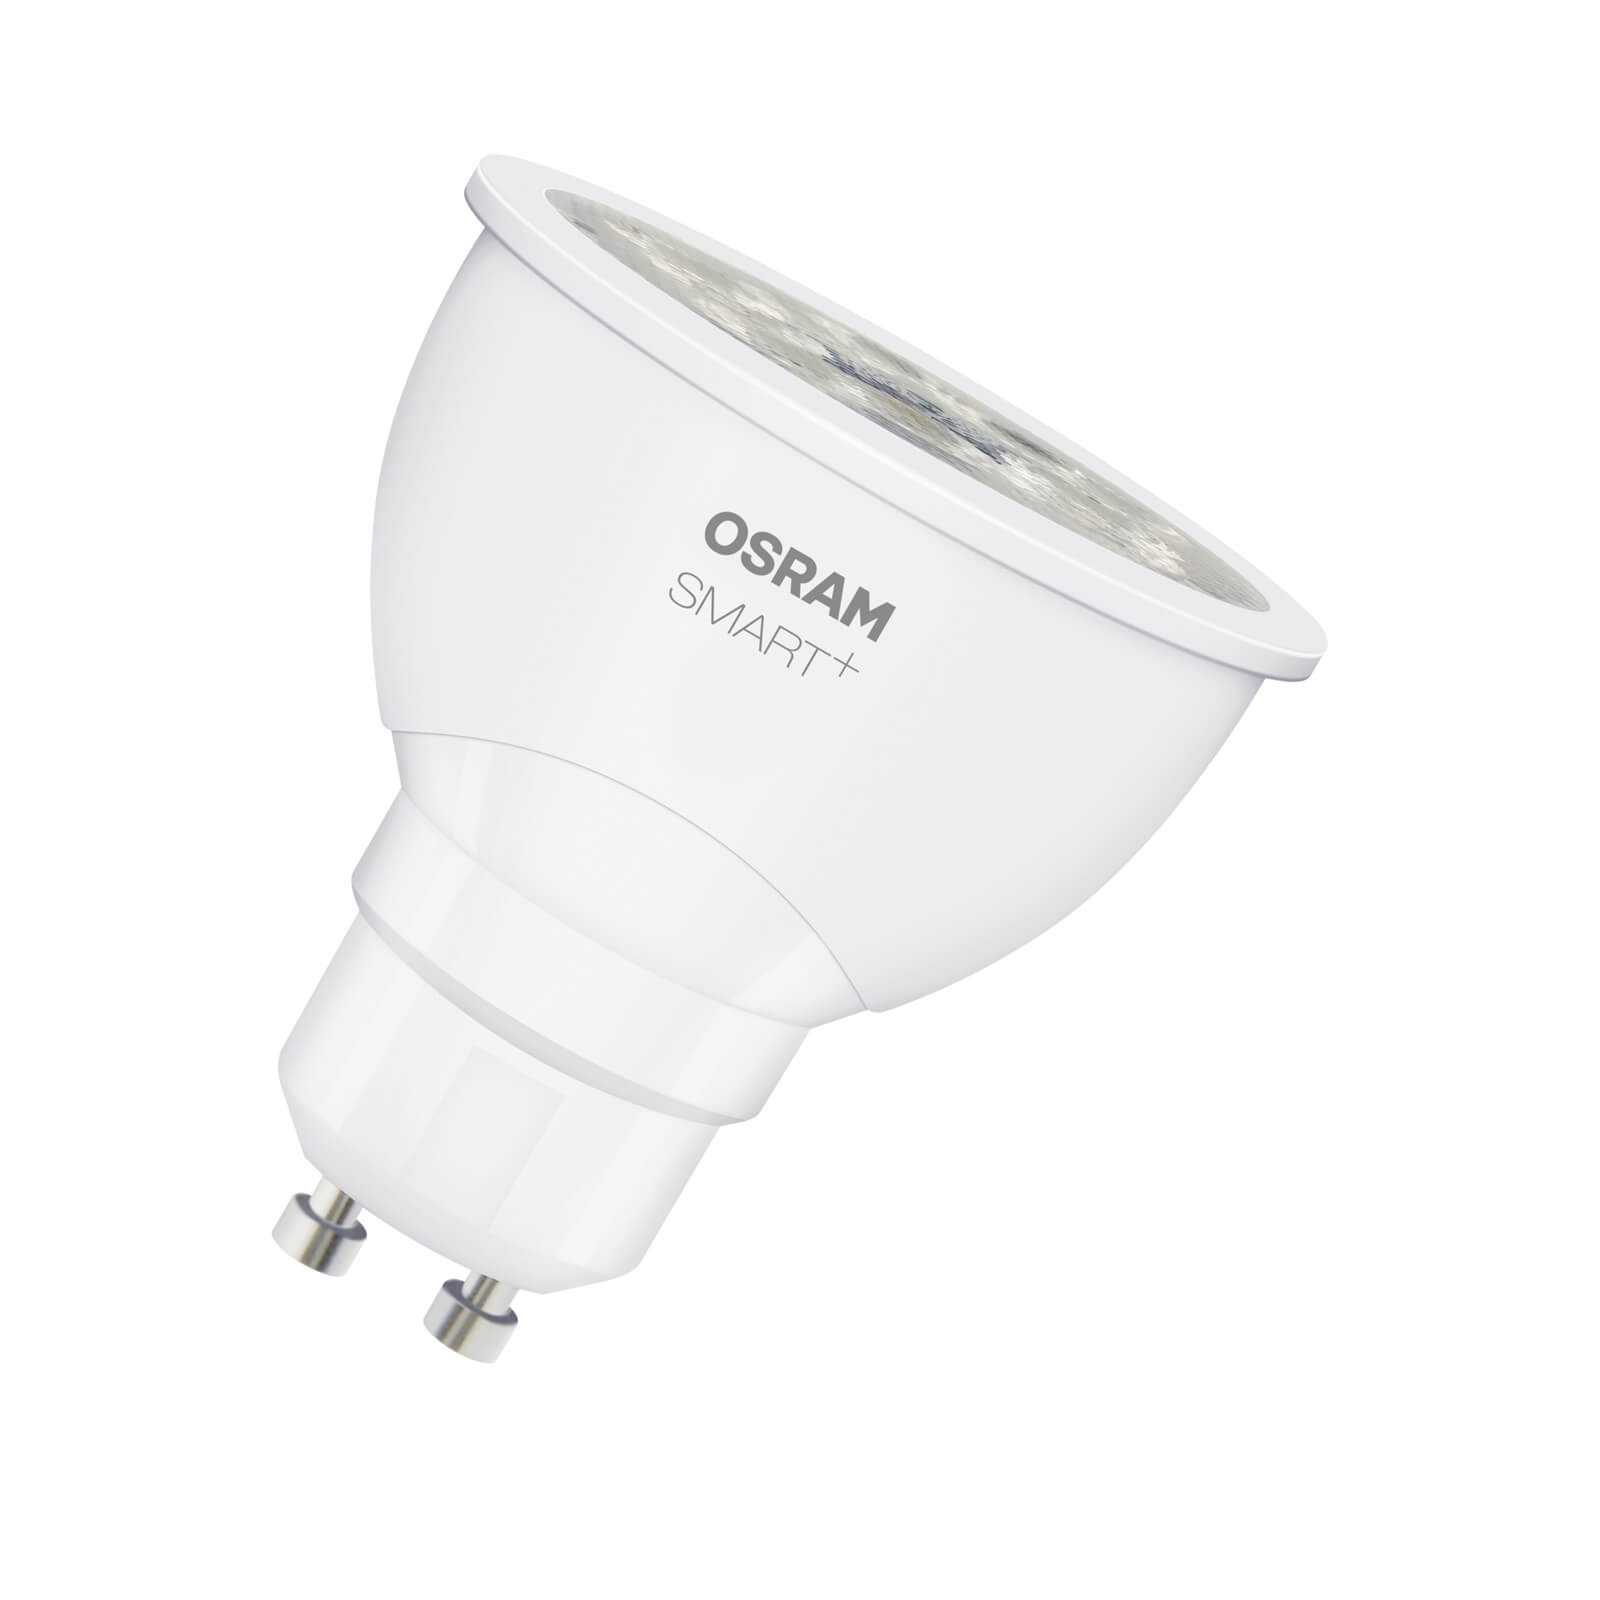 Osram Smart+ GU10 TW Light Bulb